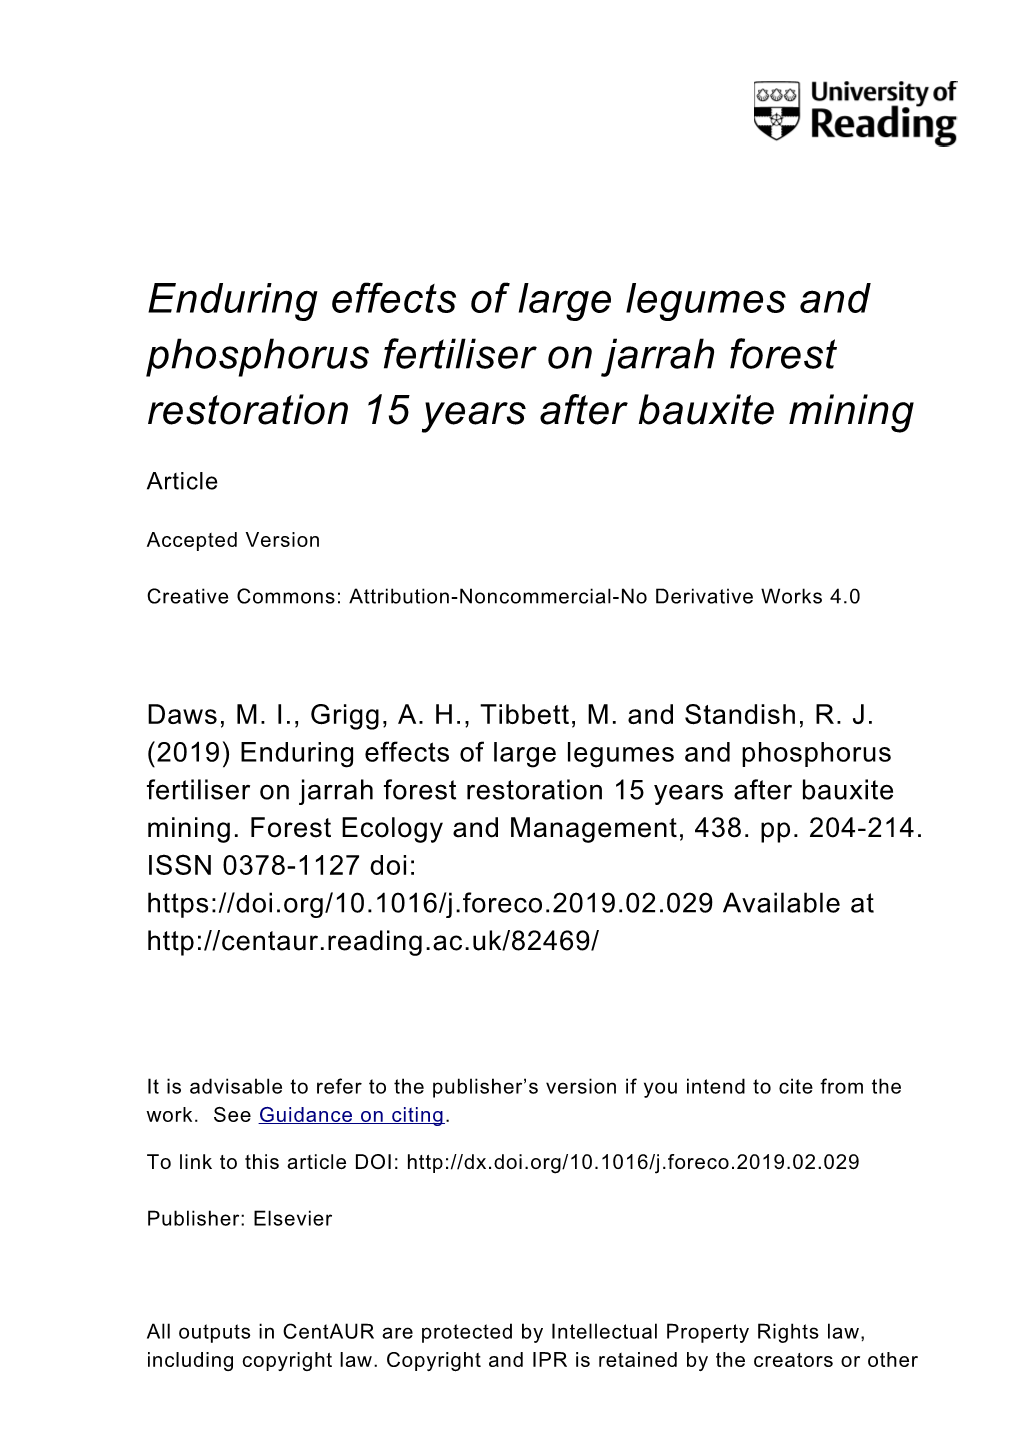 Enduring Effects of Large Legumes and Phosphorus Fertiliser on Jarrah Forest Restoration 15 Years After Bauxite Mining